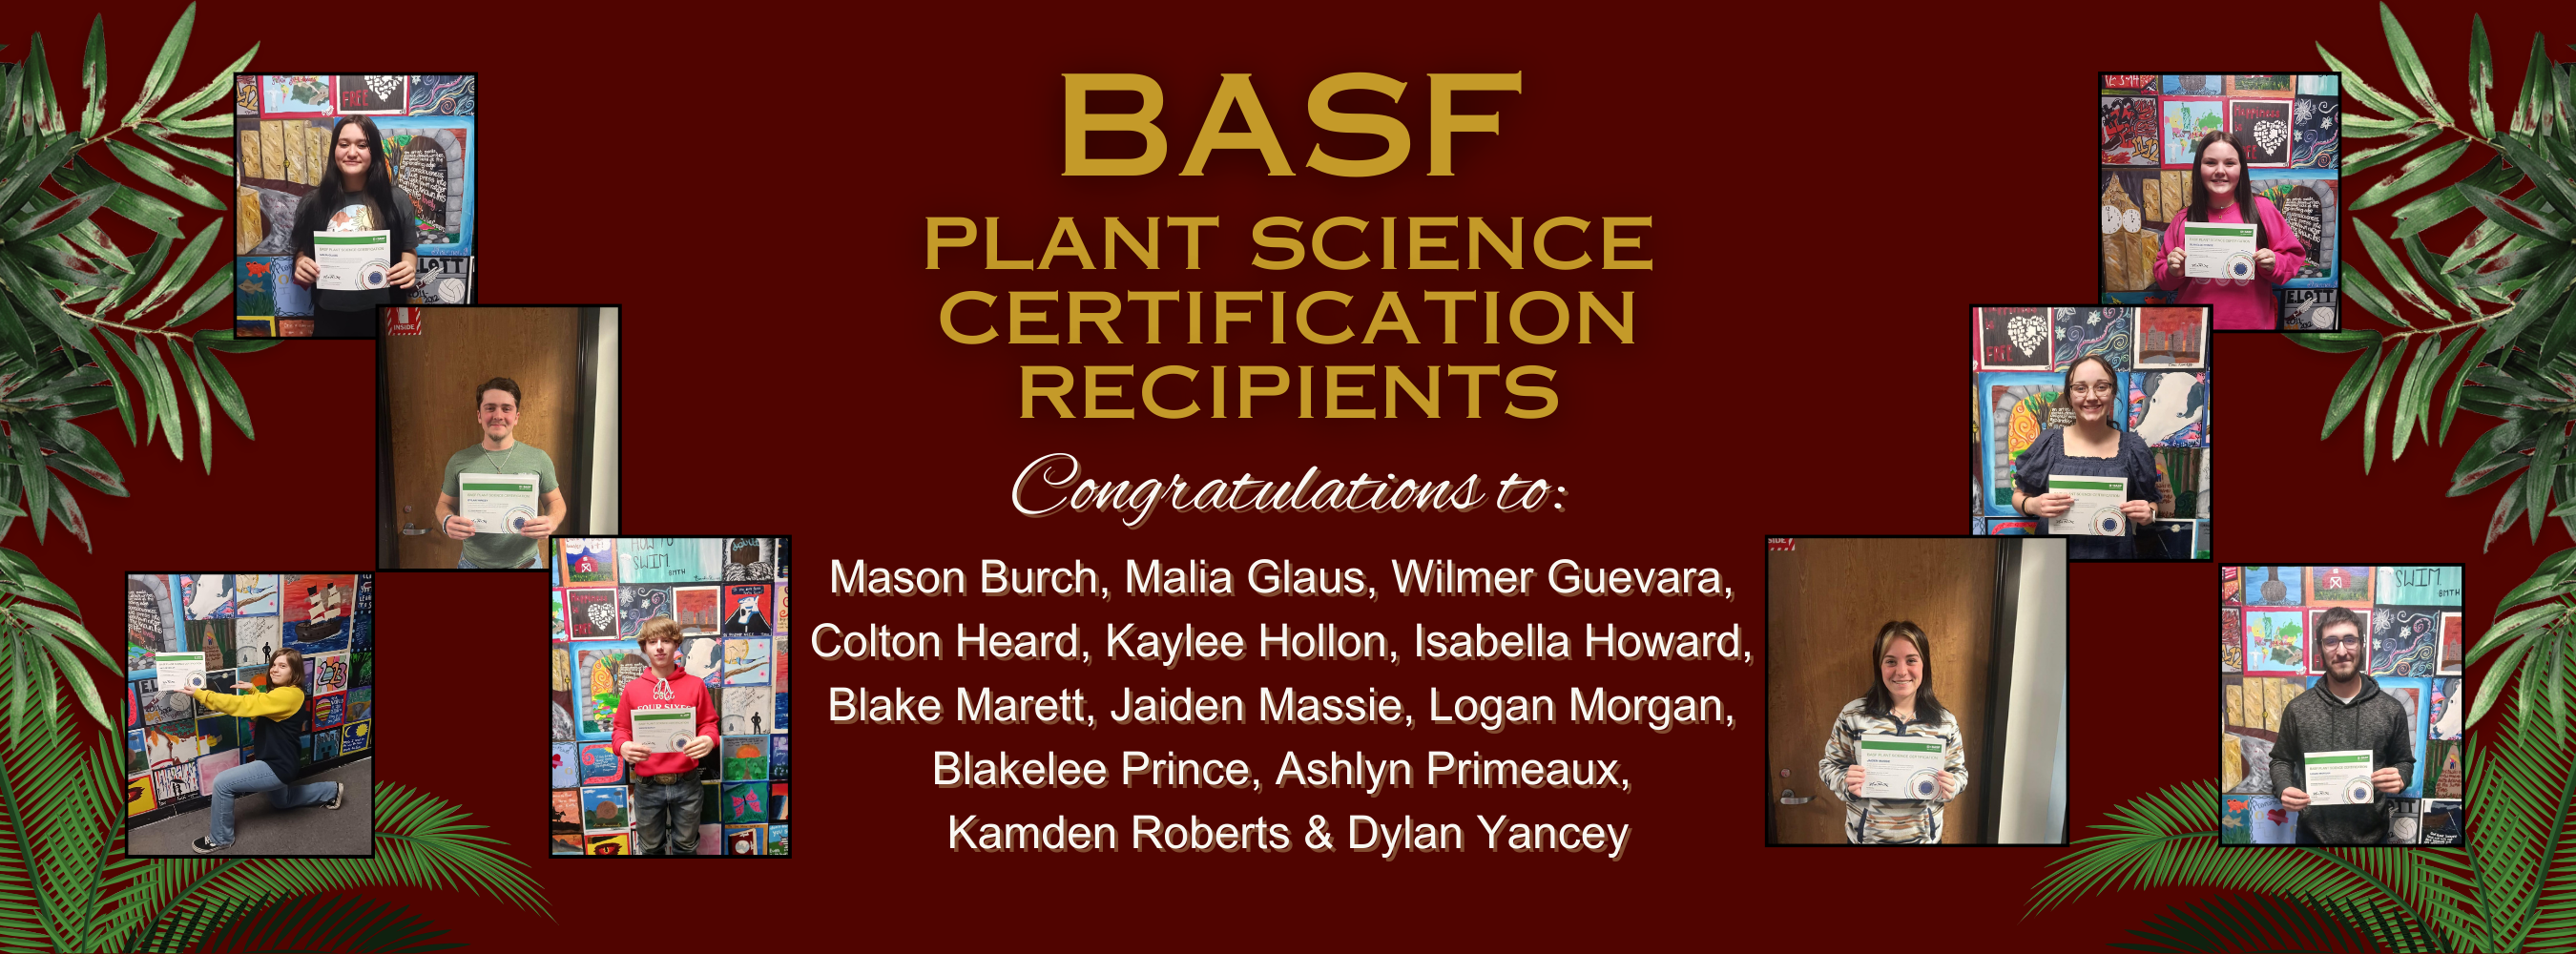 BASF Certification Recipients